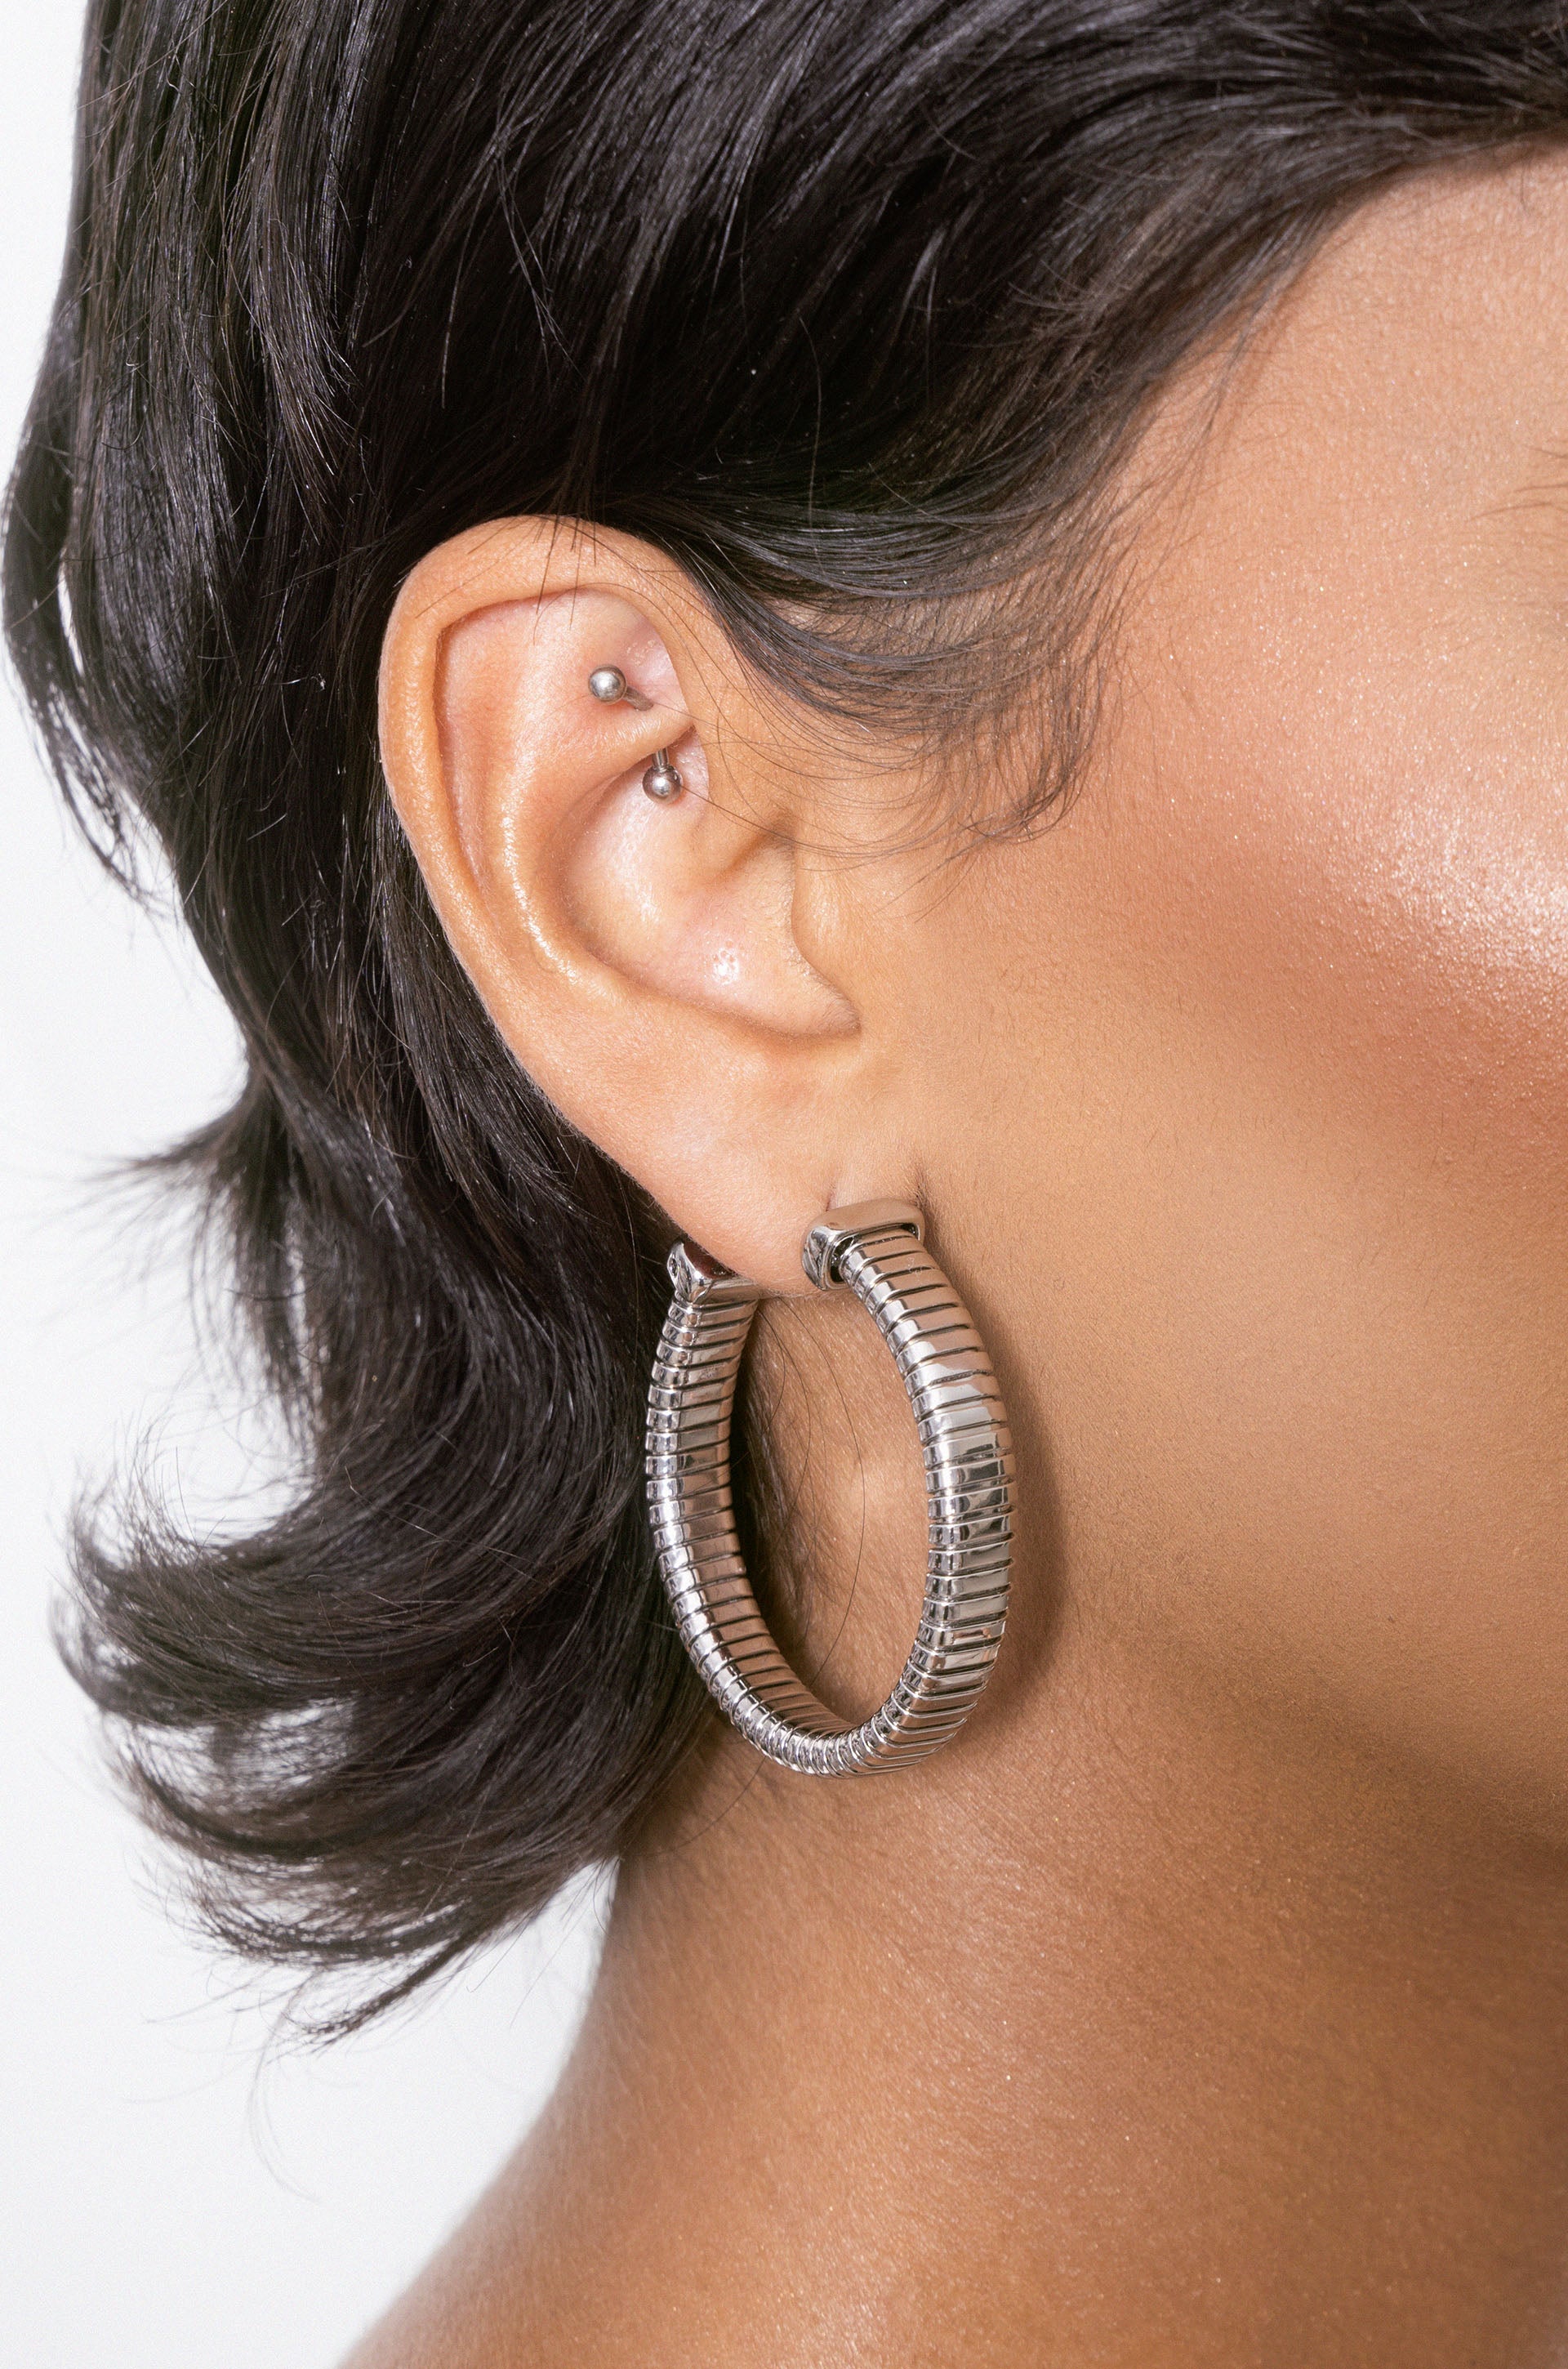 Hypoallergenic Earrings For Sensitive Ears: Where To Buy